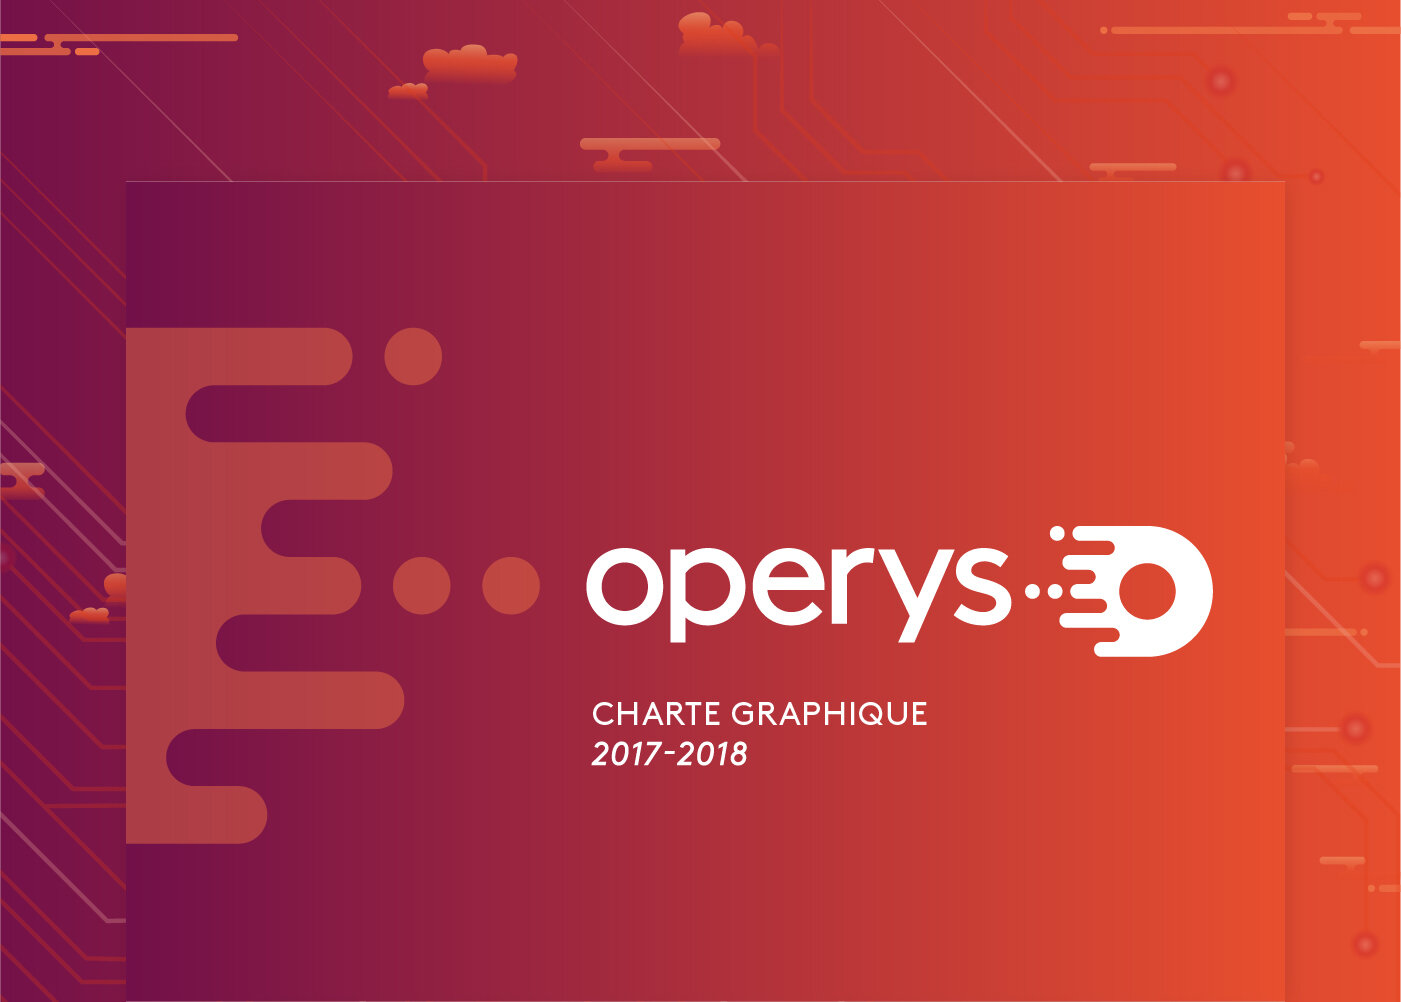 Operys - Charte graphique 2017-2018